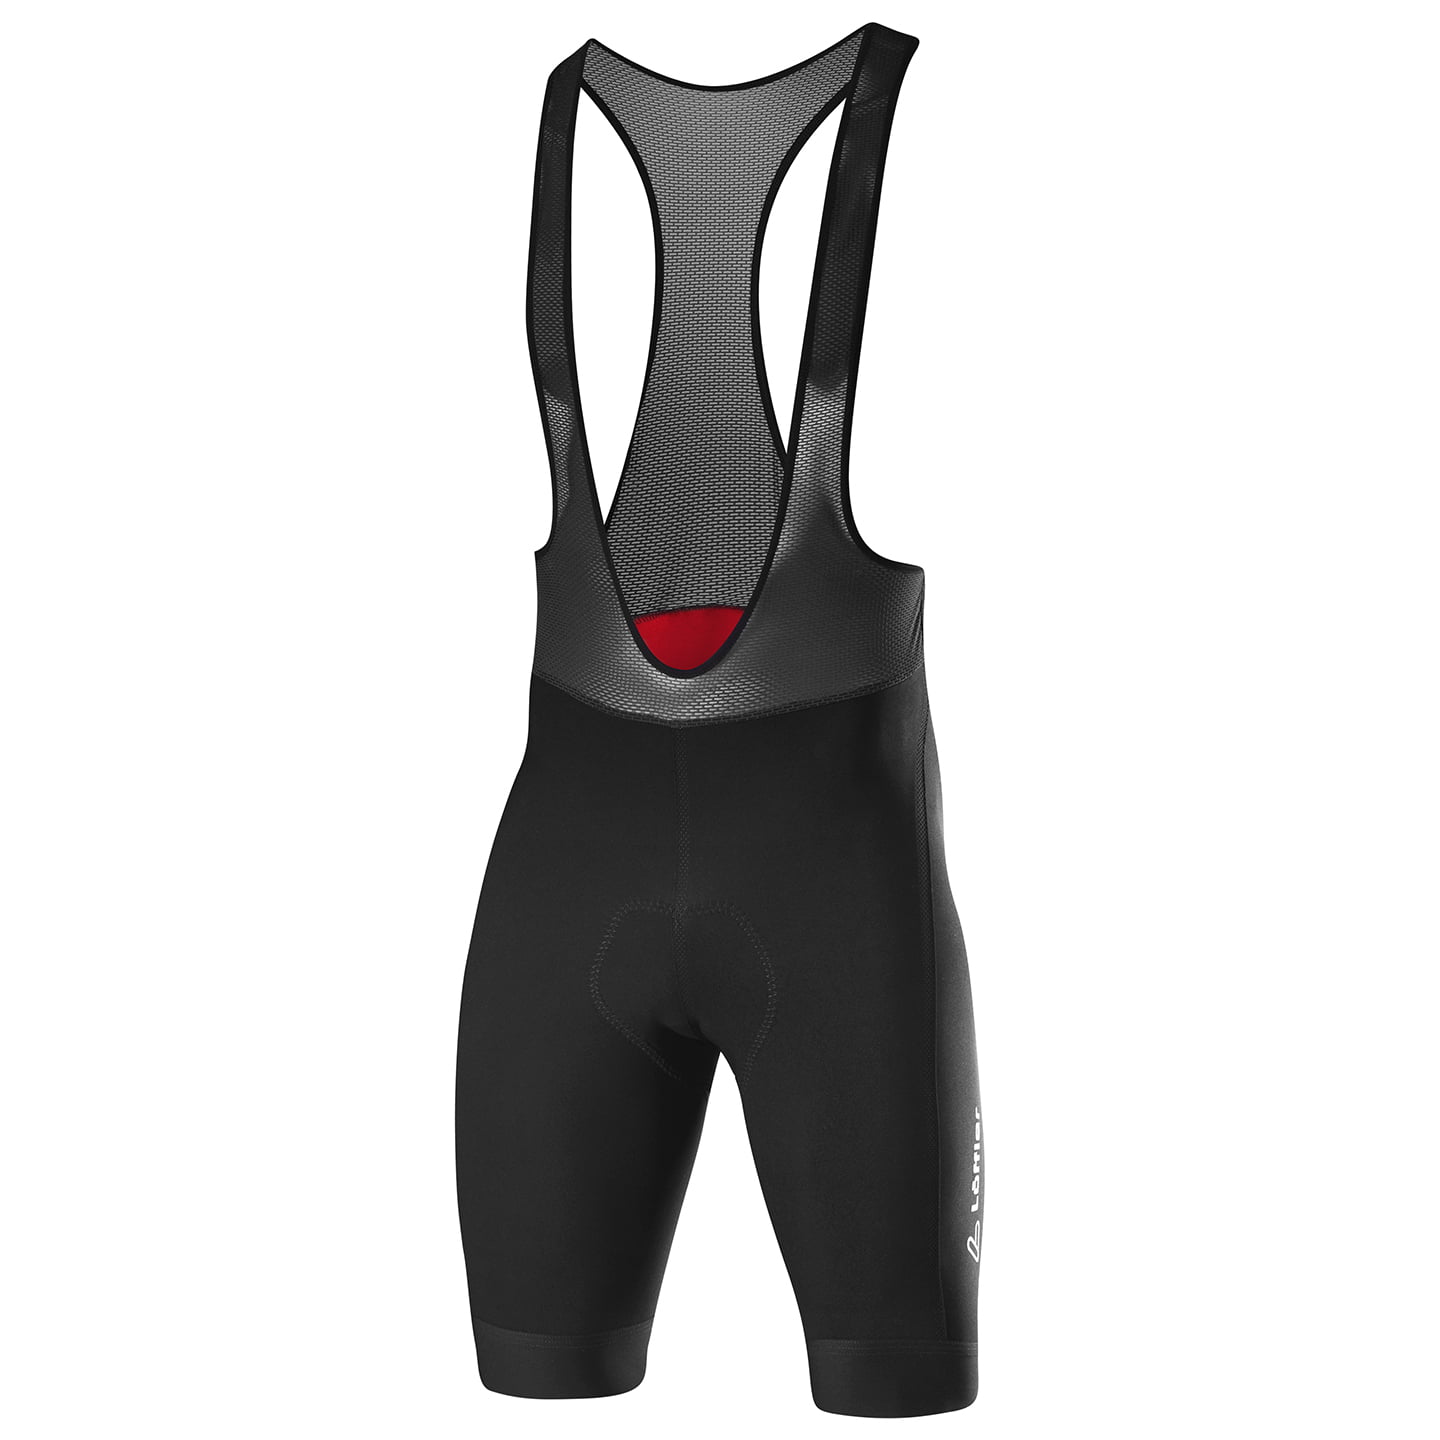 LOFFLER hotBOND Bib Shorts Bib Shorts, for men, size XL, Cycle shorts, Cycling clothing